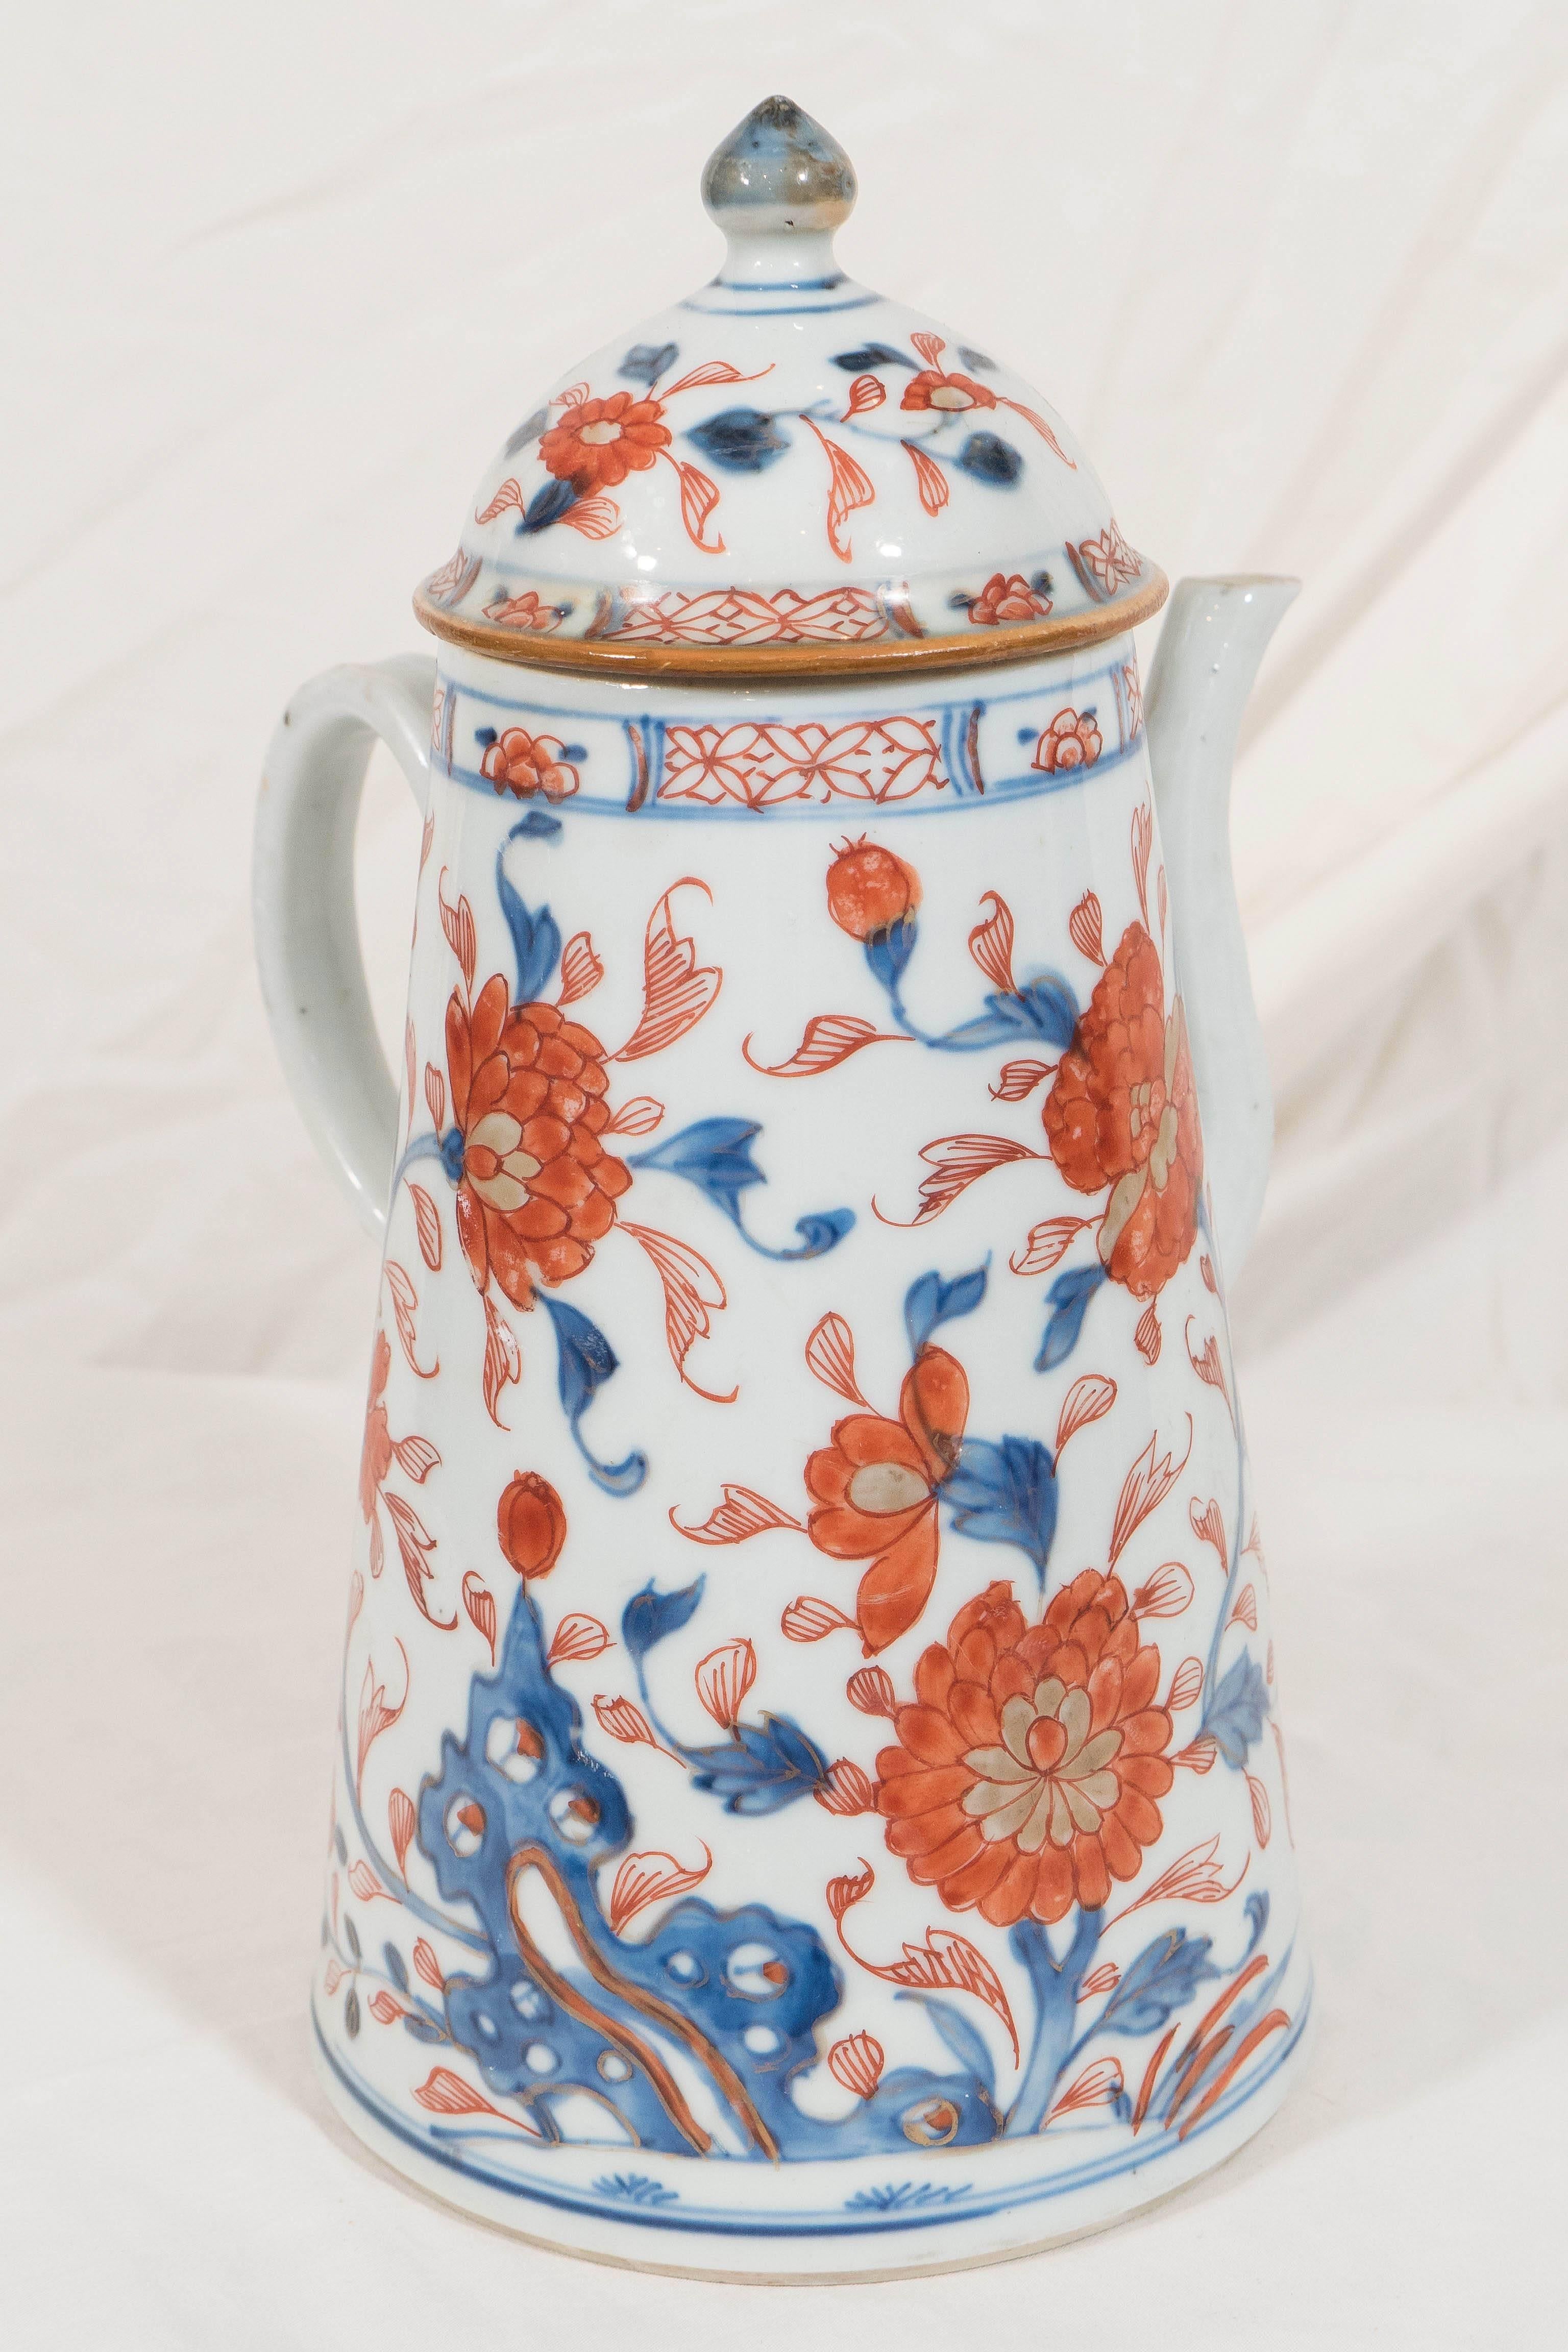 18th Century Antique Chinese Porcelain Imari Decorated Coffee Pot